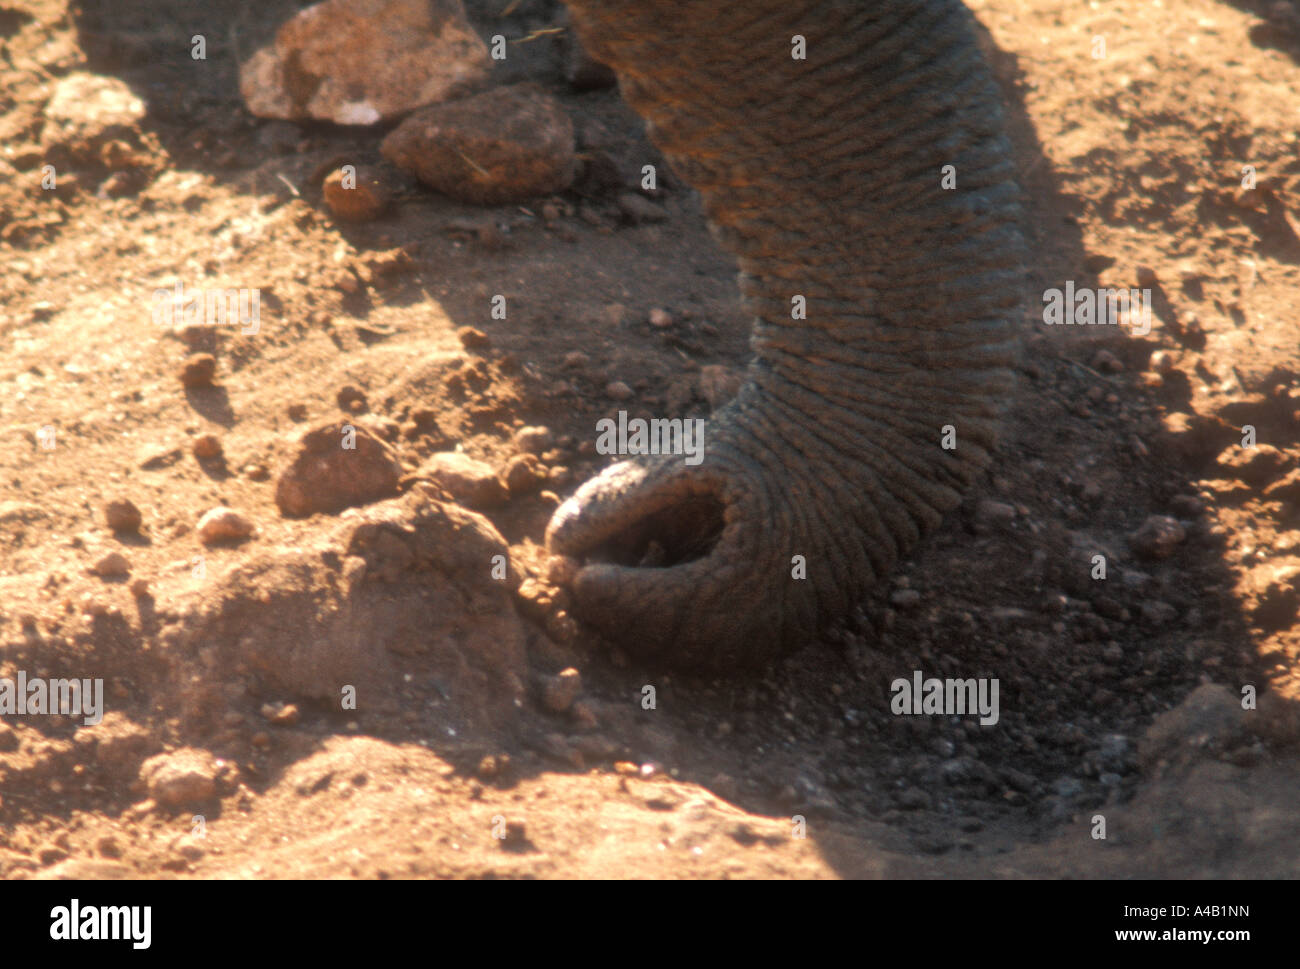 Close up of elephant s trunk grasping a piece of rock salt at a salt lick Tsavo West National Park Kenya East Africa Stock Photo